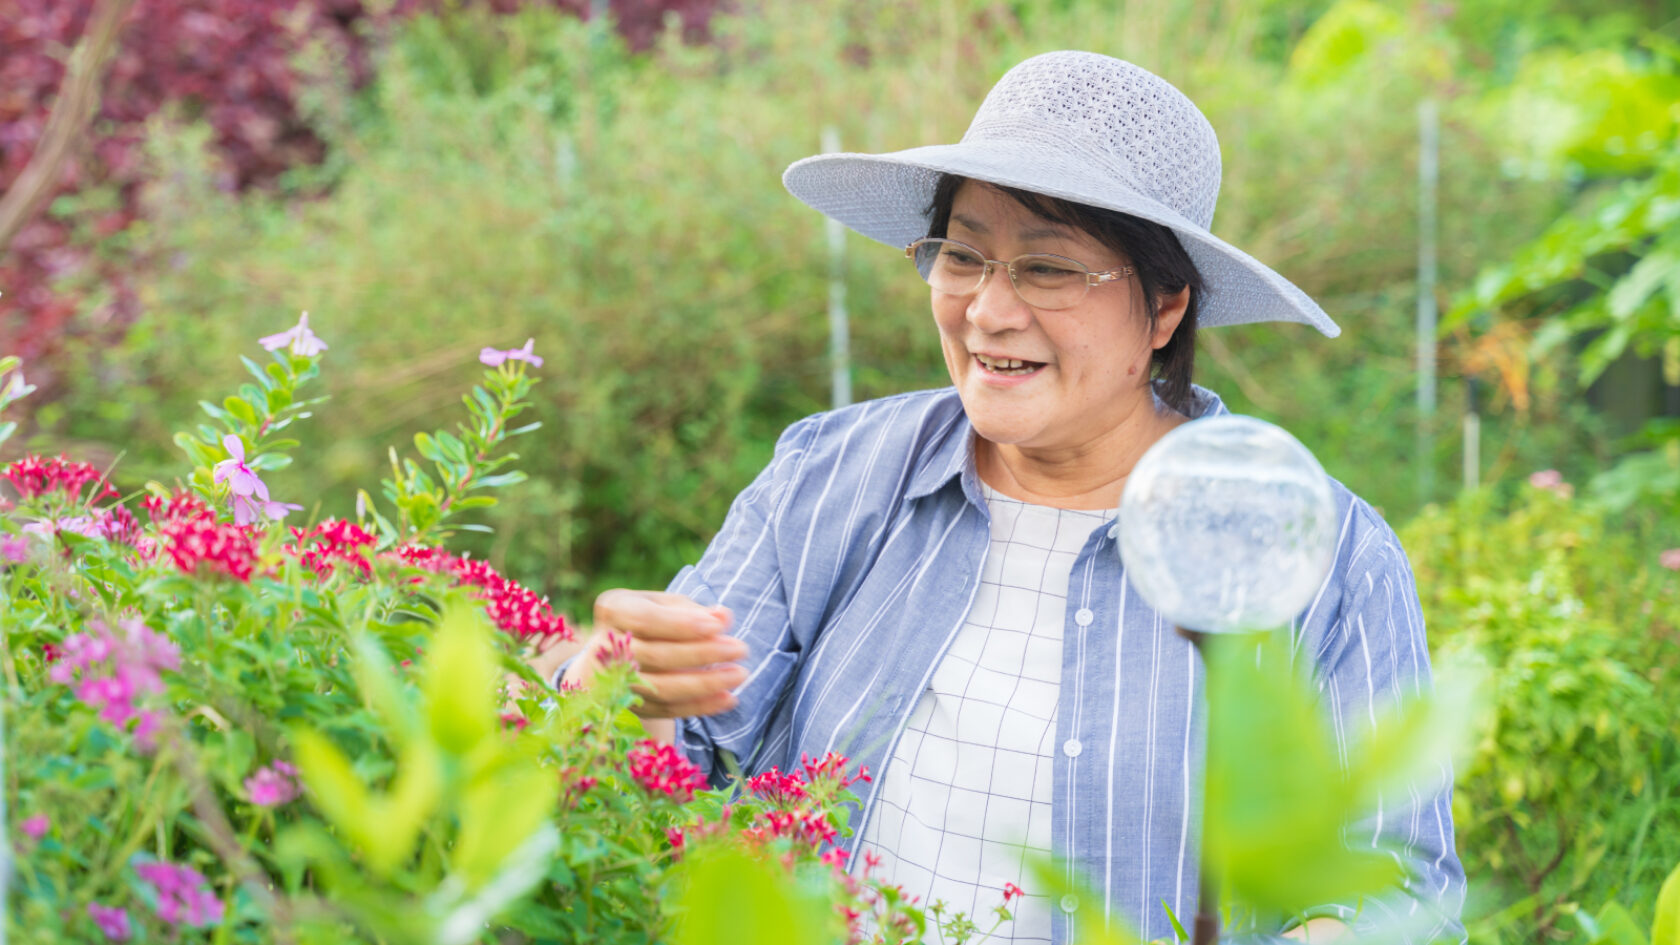 A woman tends her garden wearing a wide-brimmed hat.